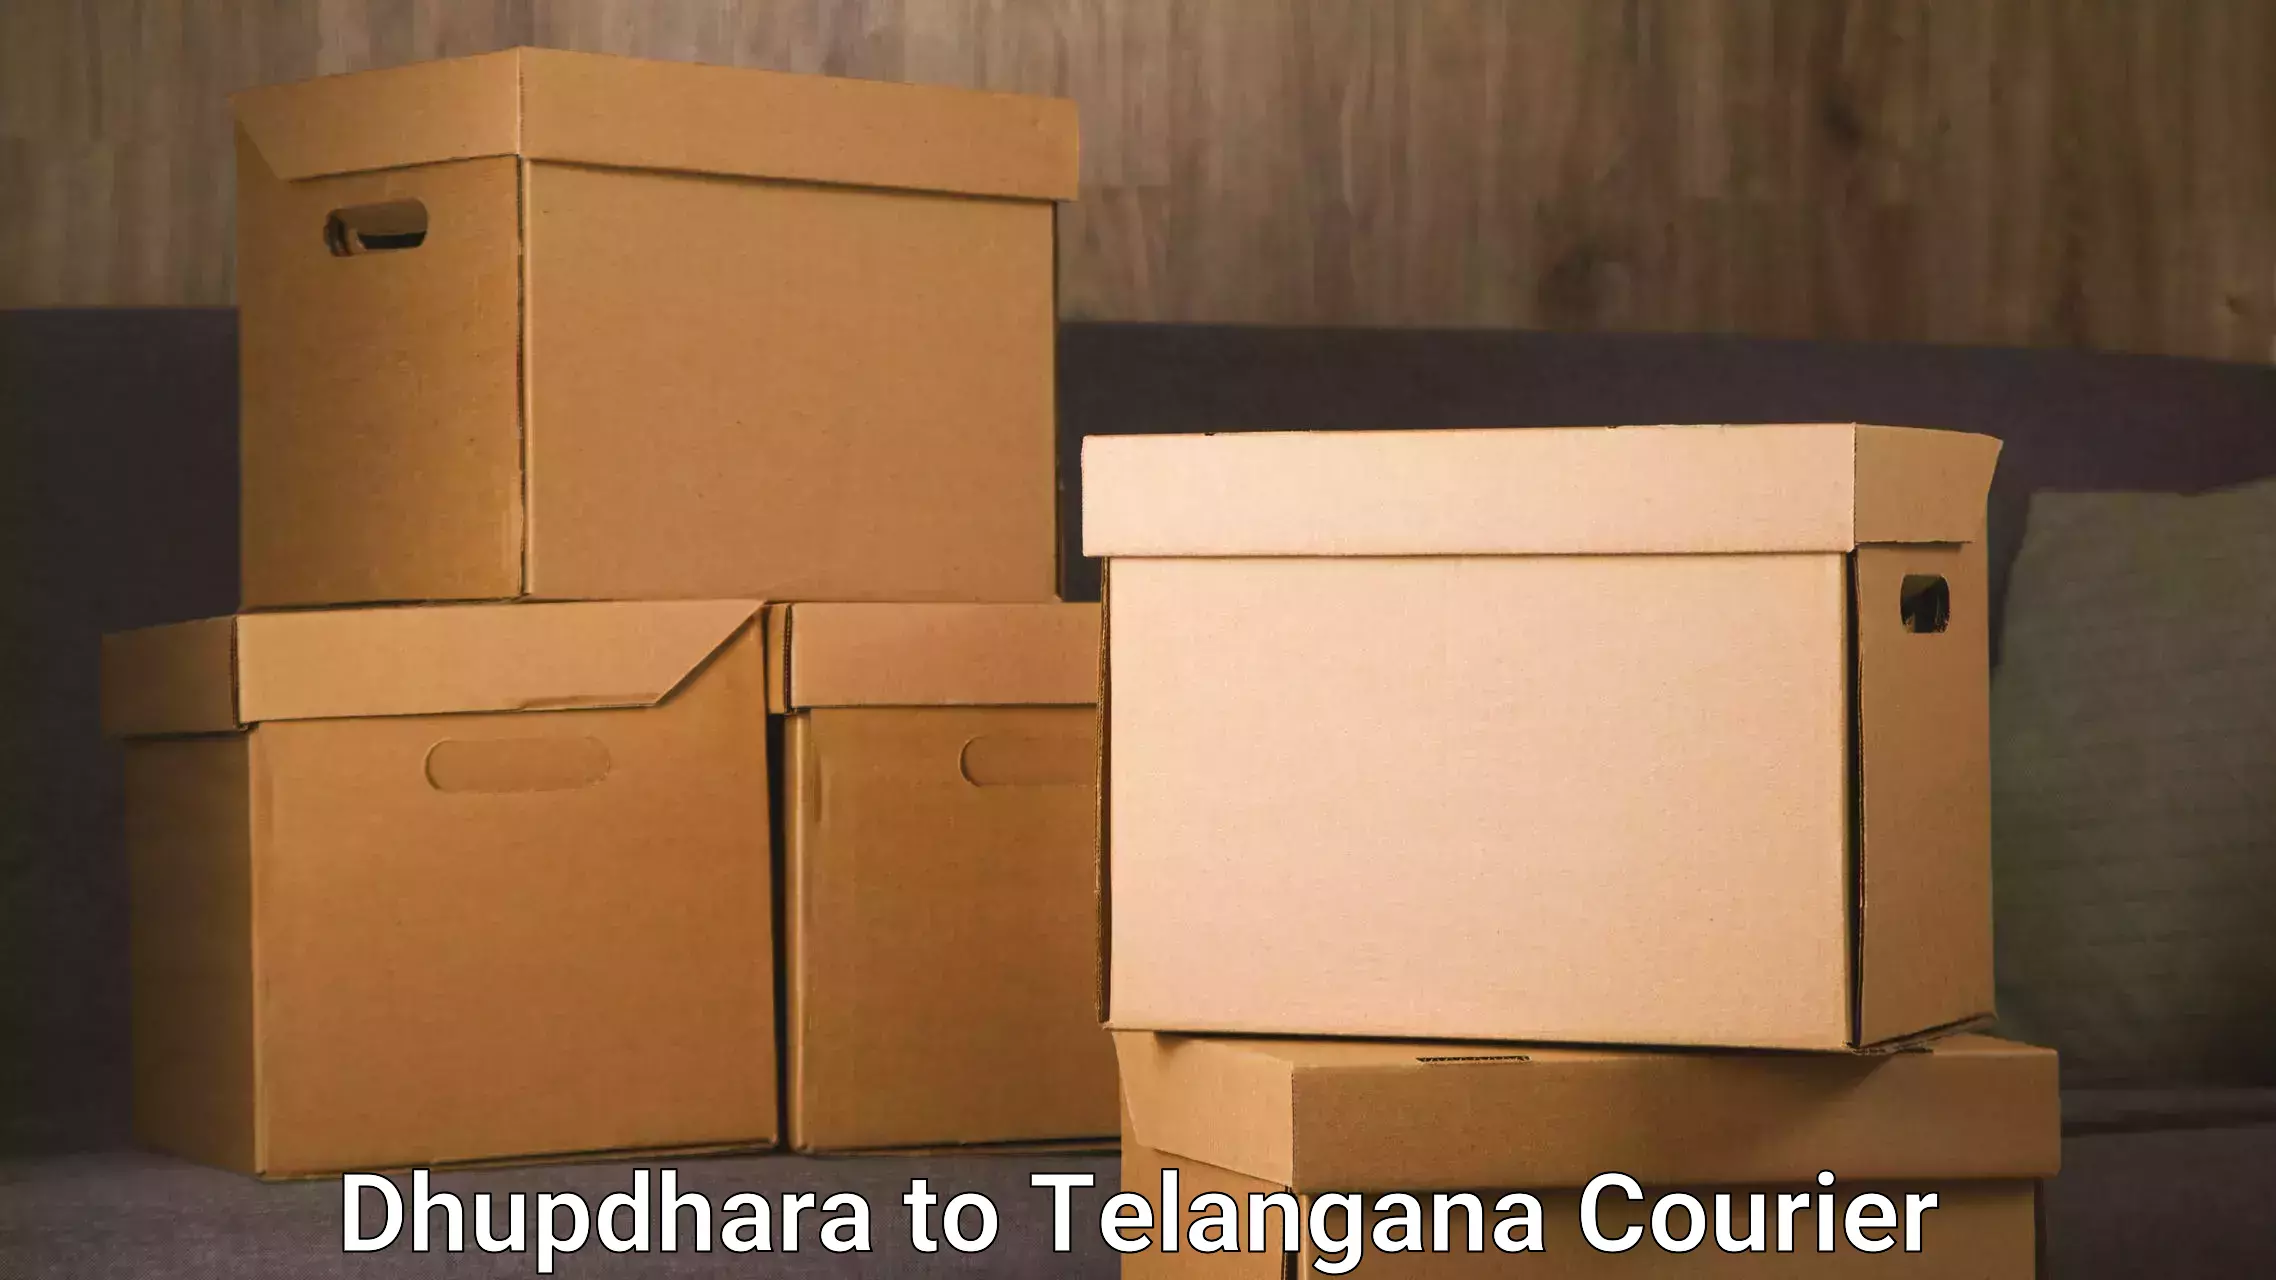 Next day courier Dhupdhara to Telangana